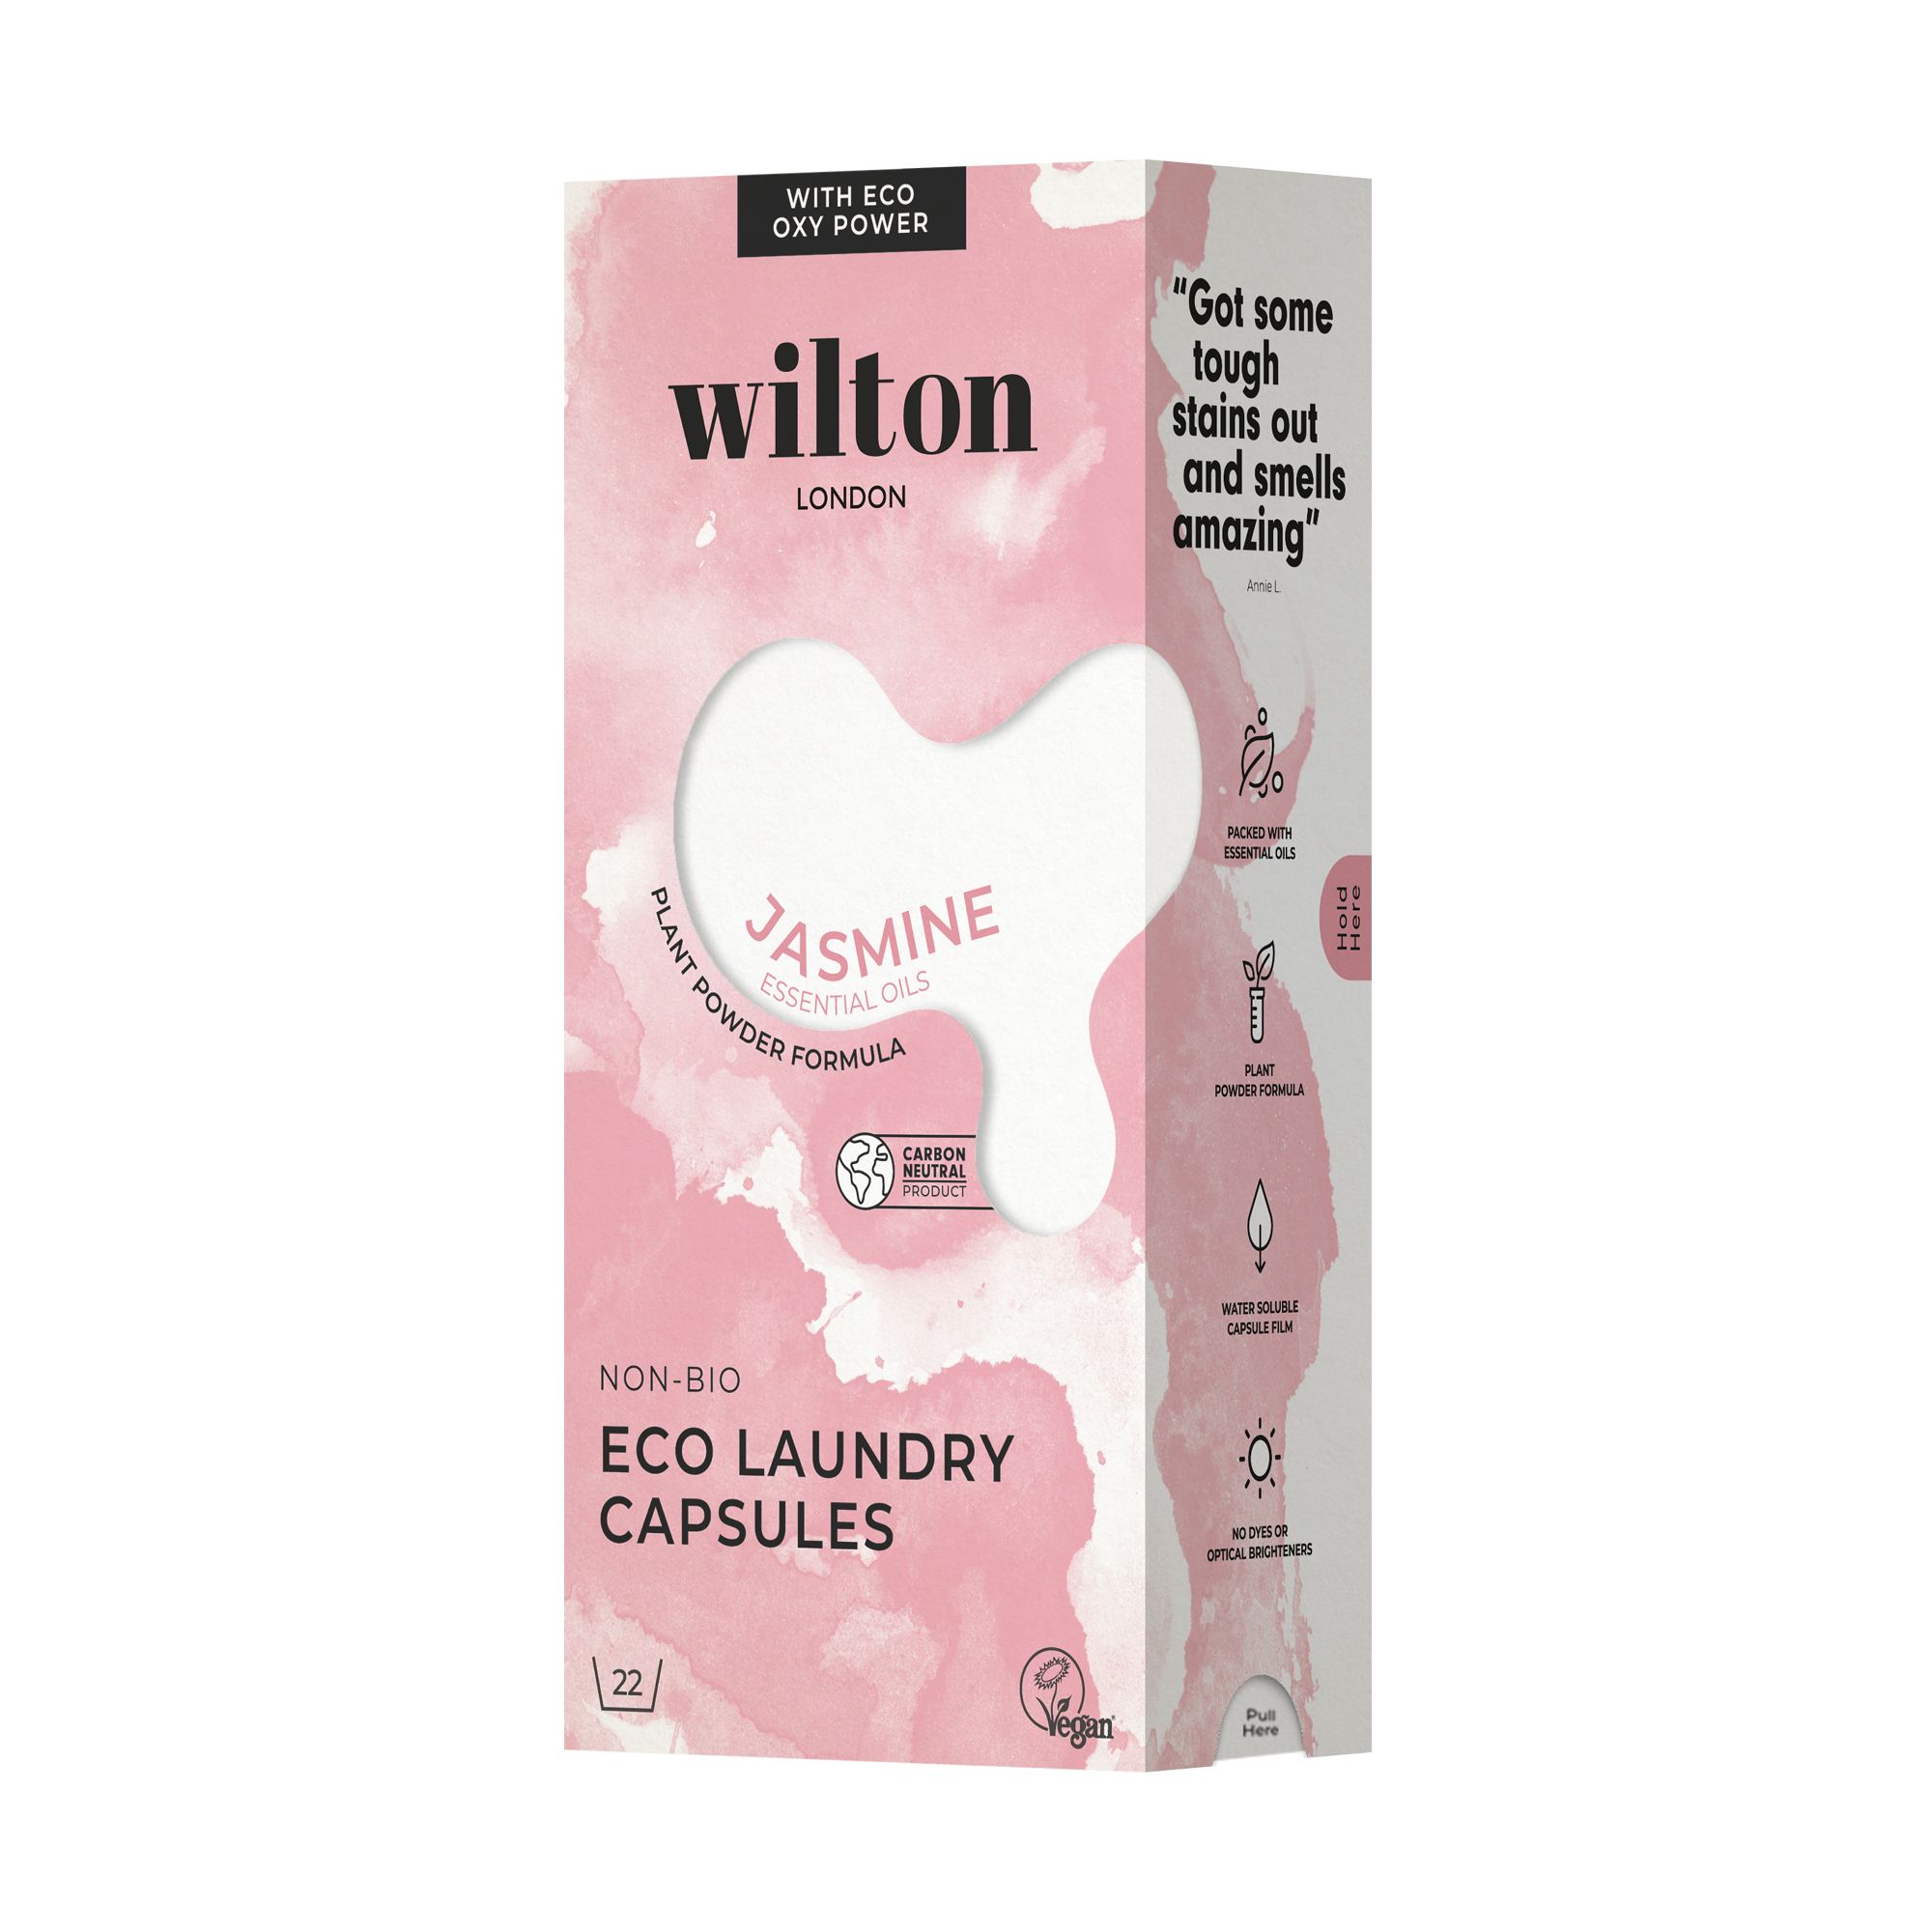 Wilton London debuts New Plant-Powder Eco Laundry Capsule